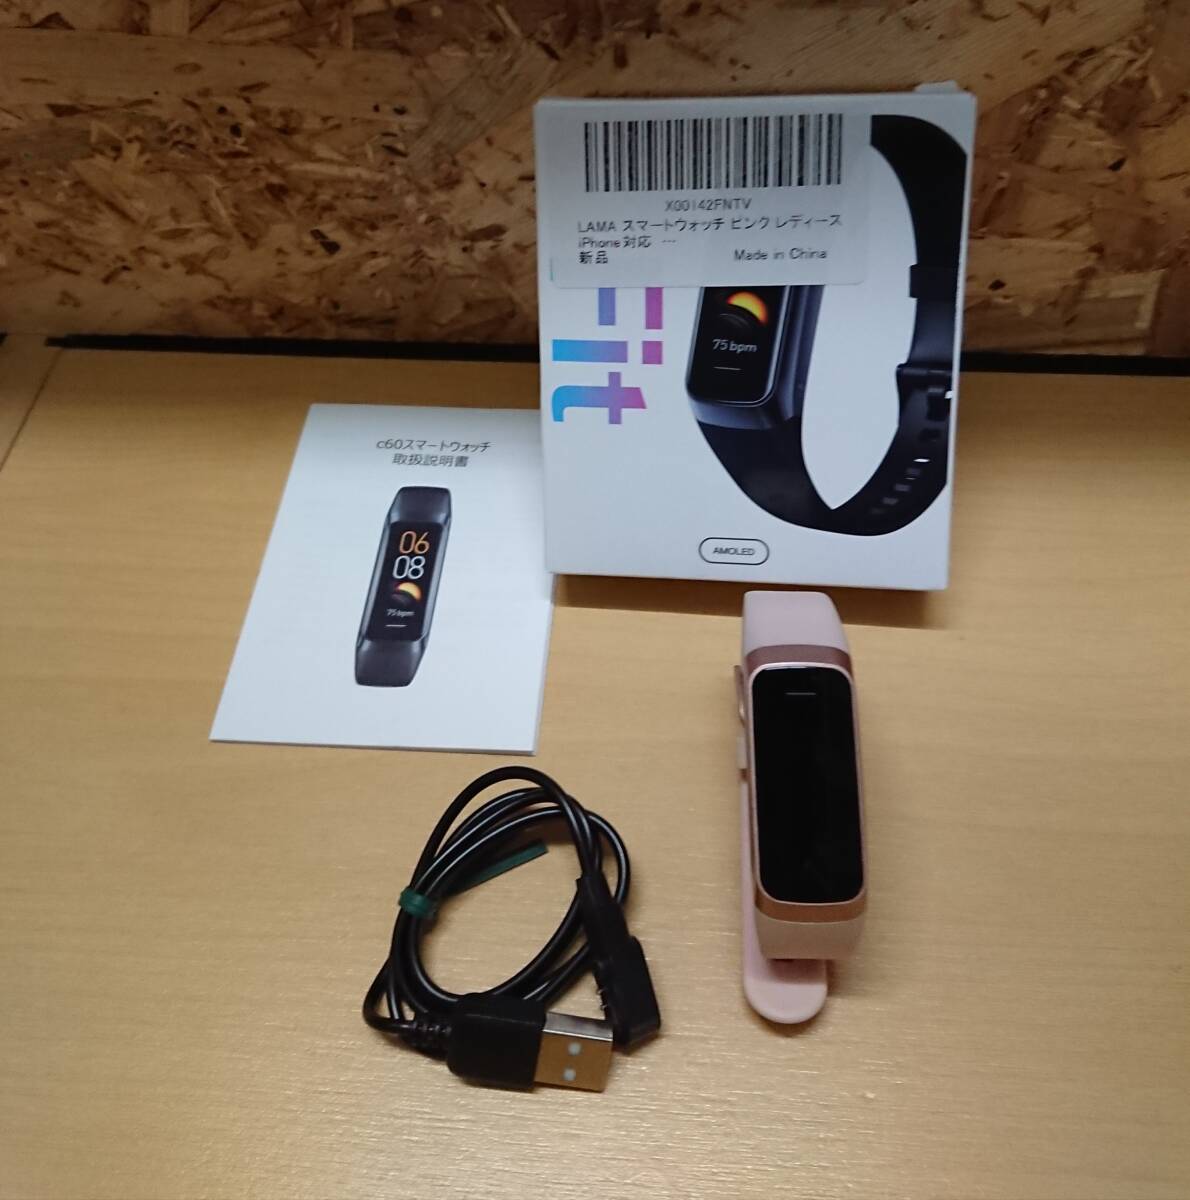 LAMA スマートウォッチ ピンク レディース iPhone対応 smart watch 歩数計 ストップウォッチ 酸素濃度 心拍数 運動記録 